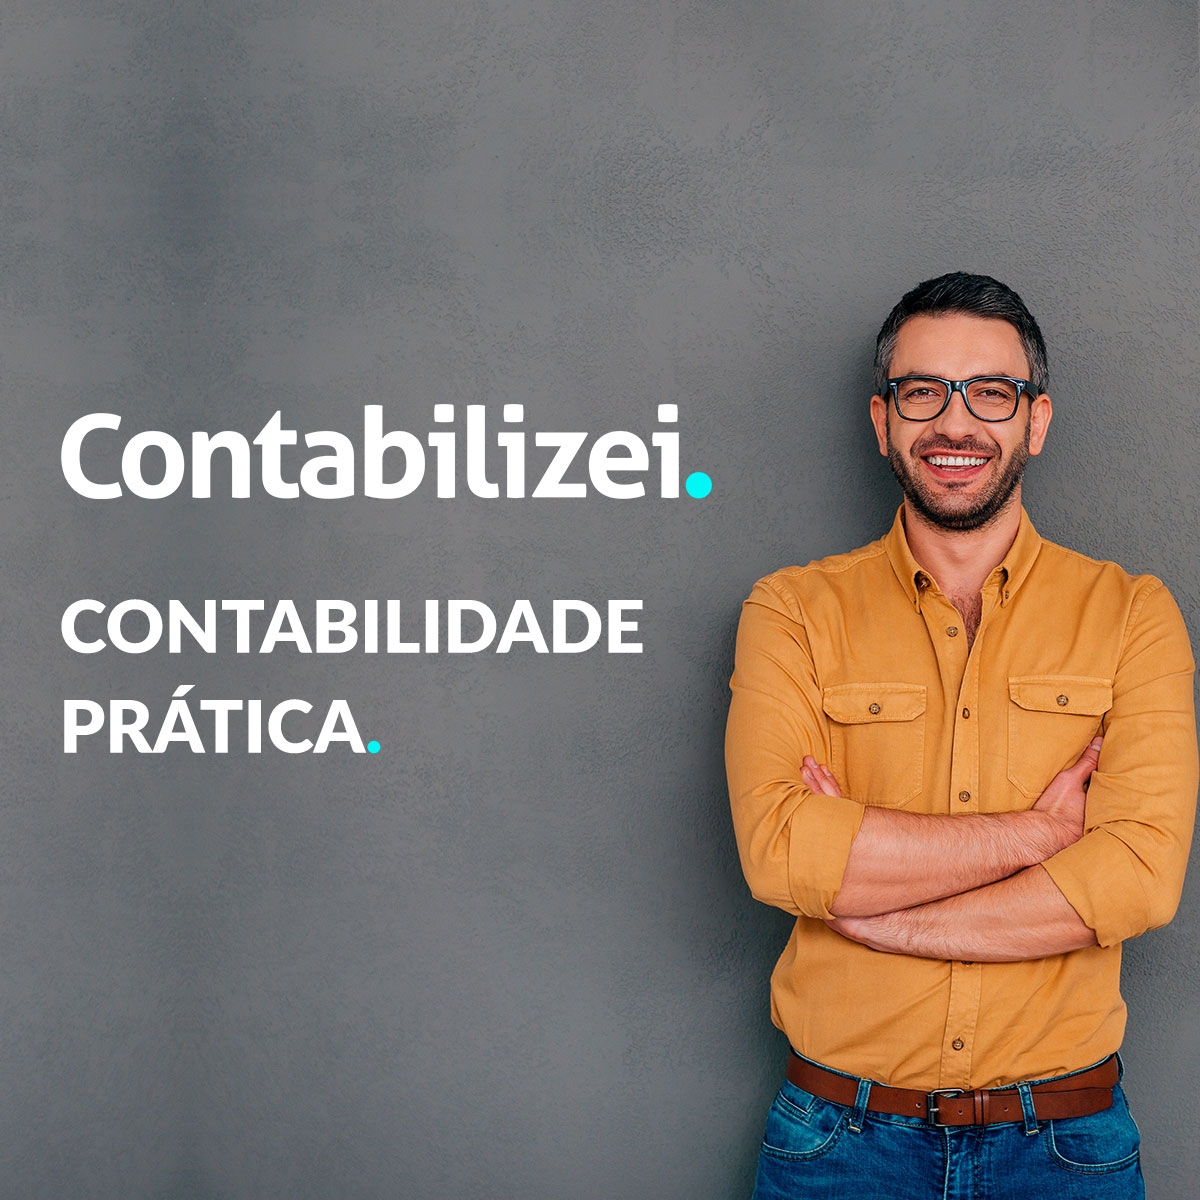 www.contabilizei.com.br